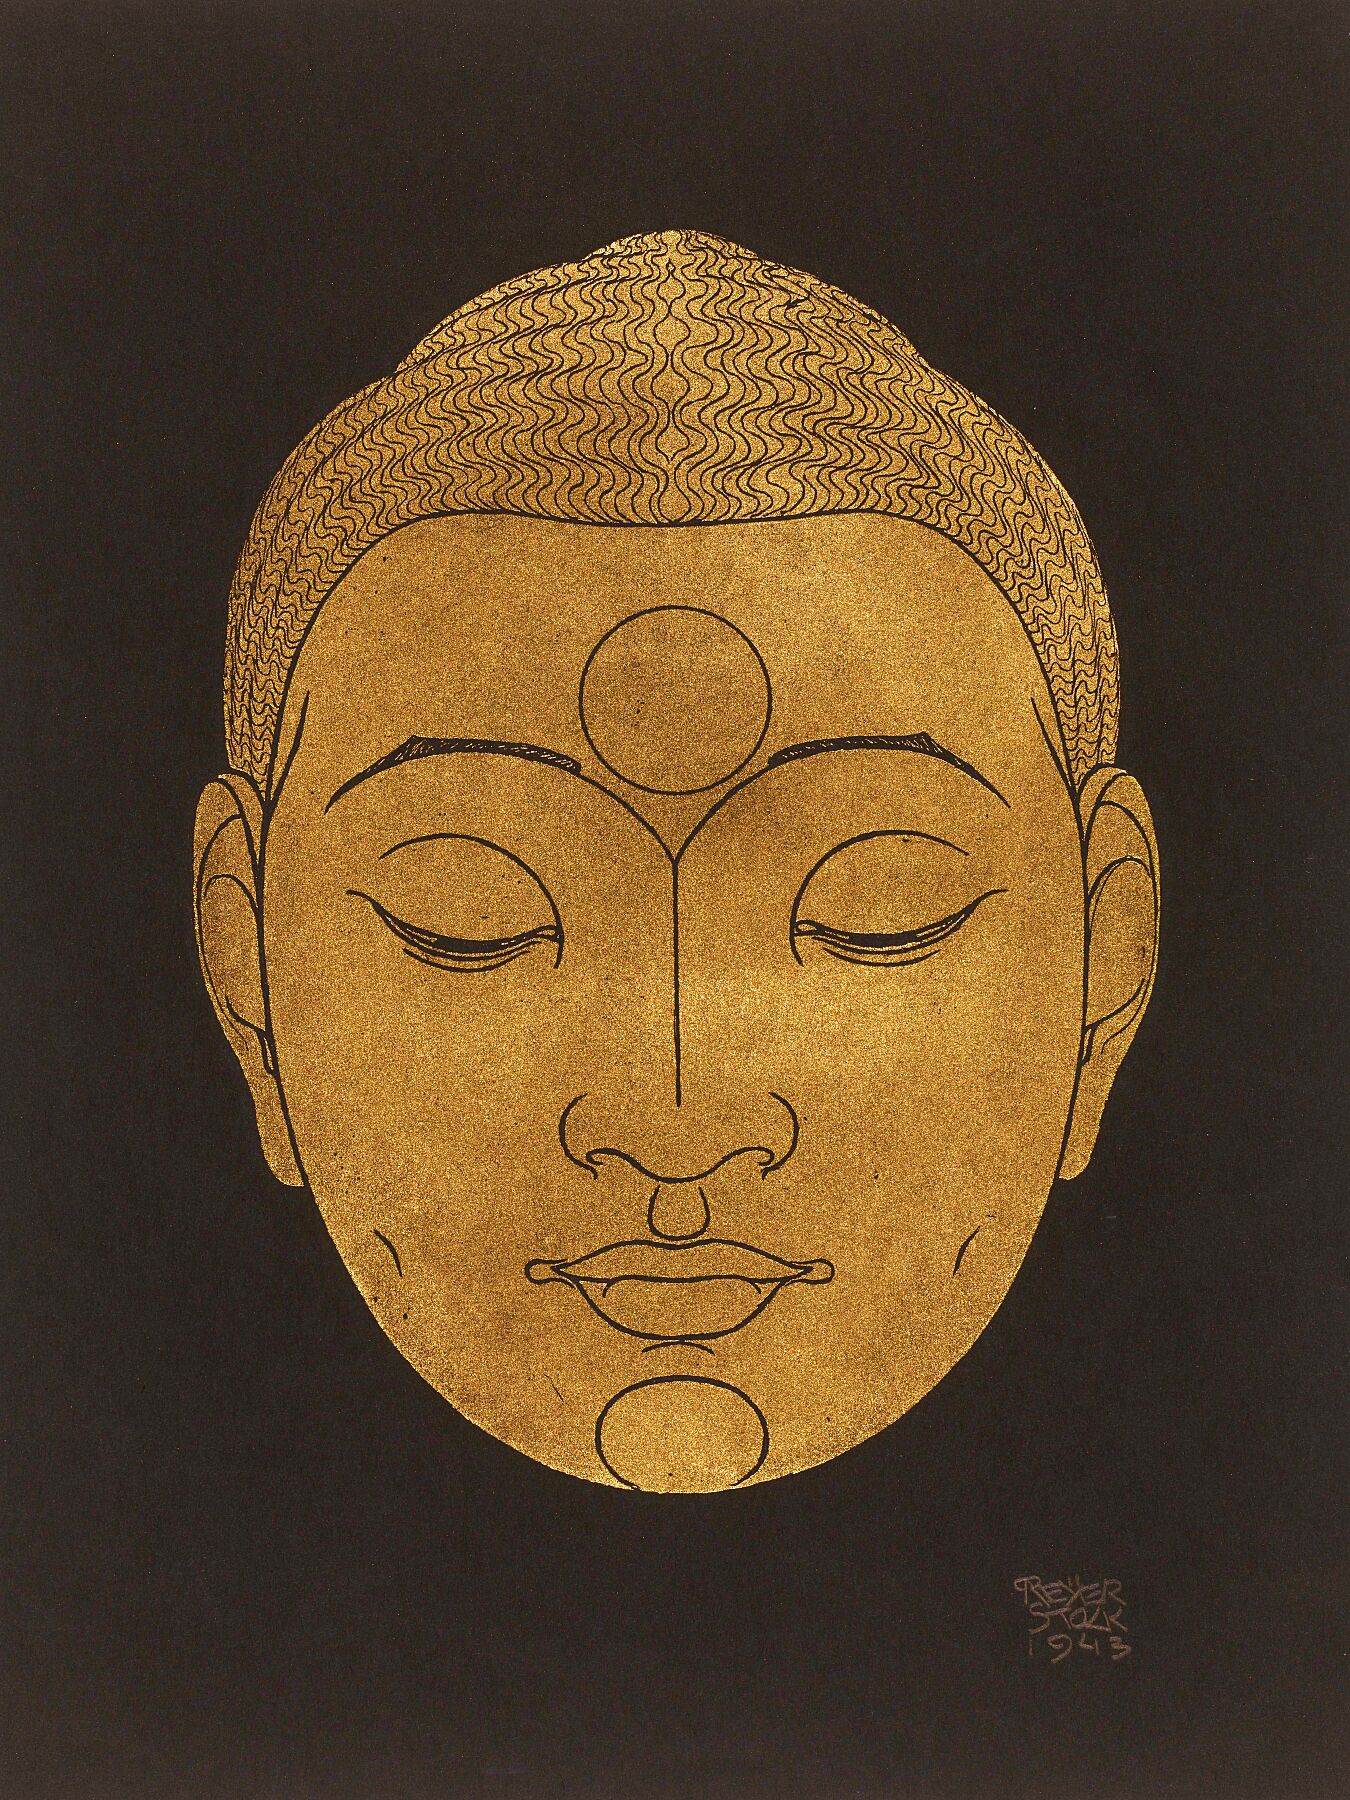 Head of Buddha by Reijer Stolk - 1943